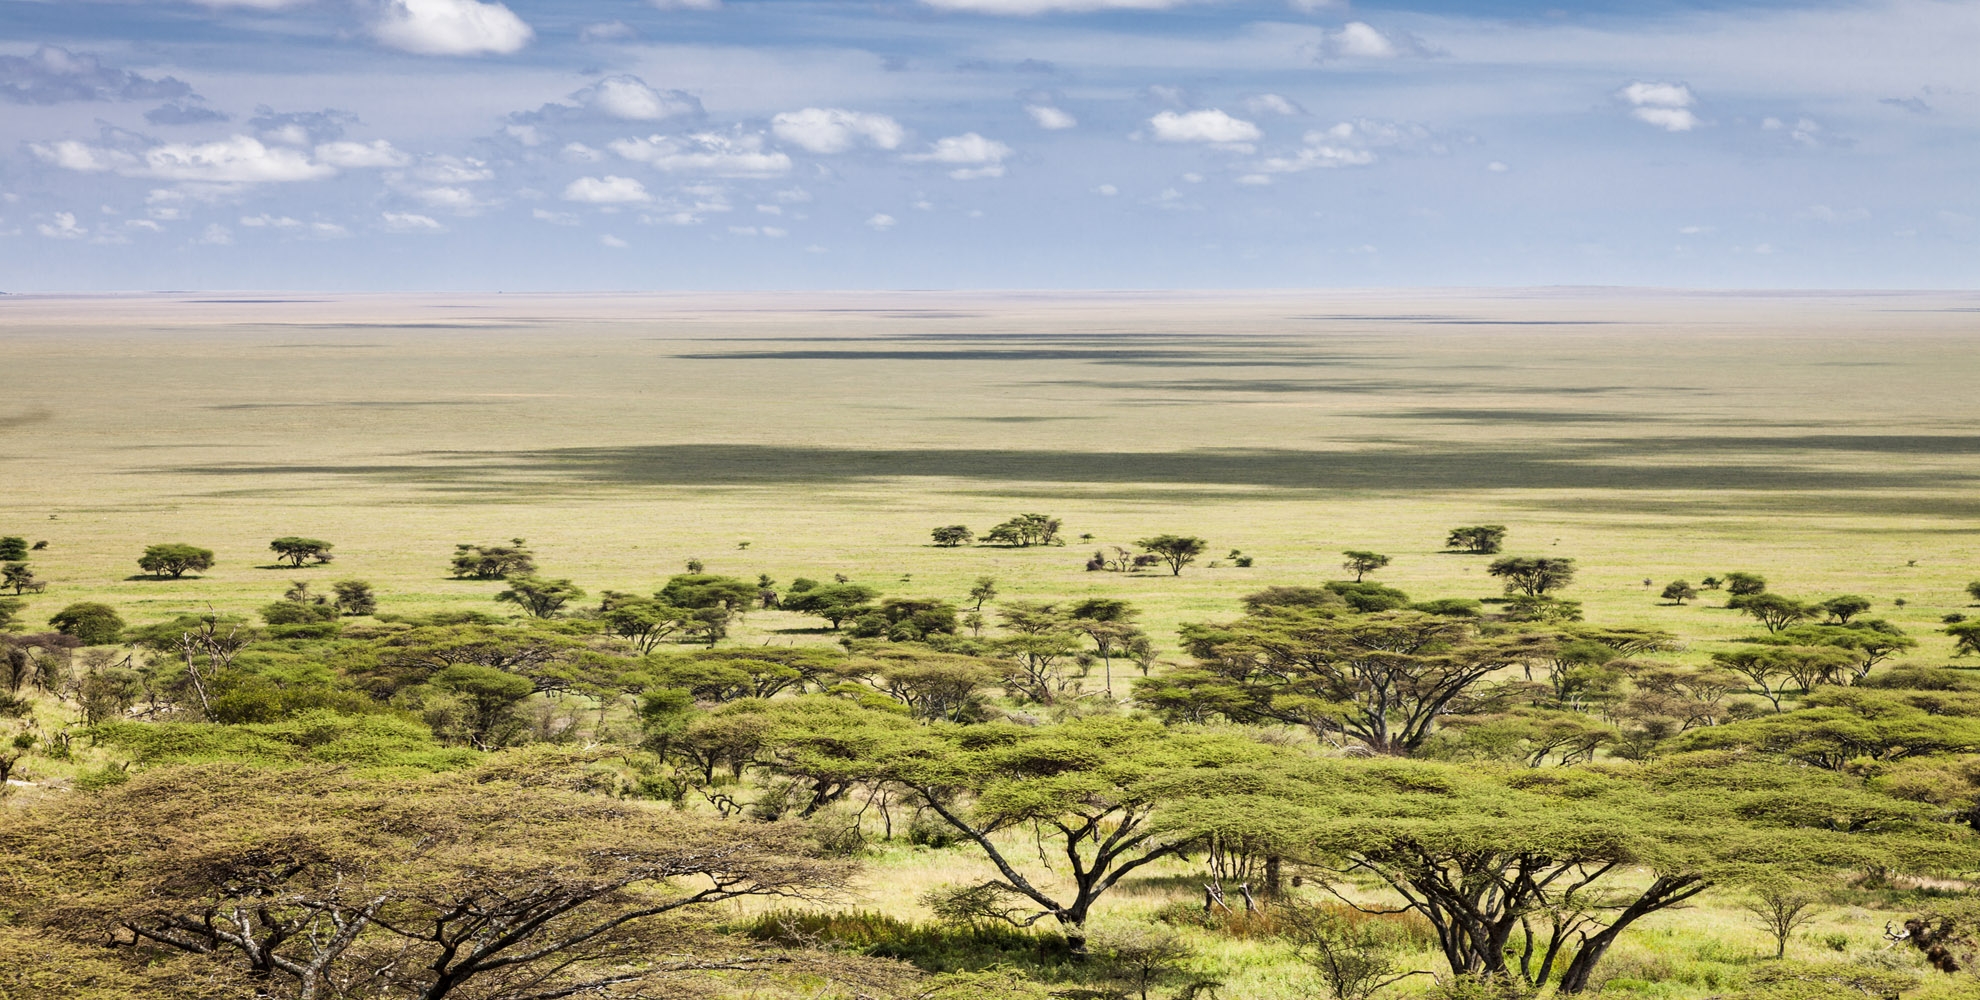 Serengeti in the morning